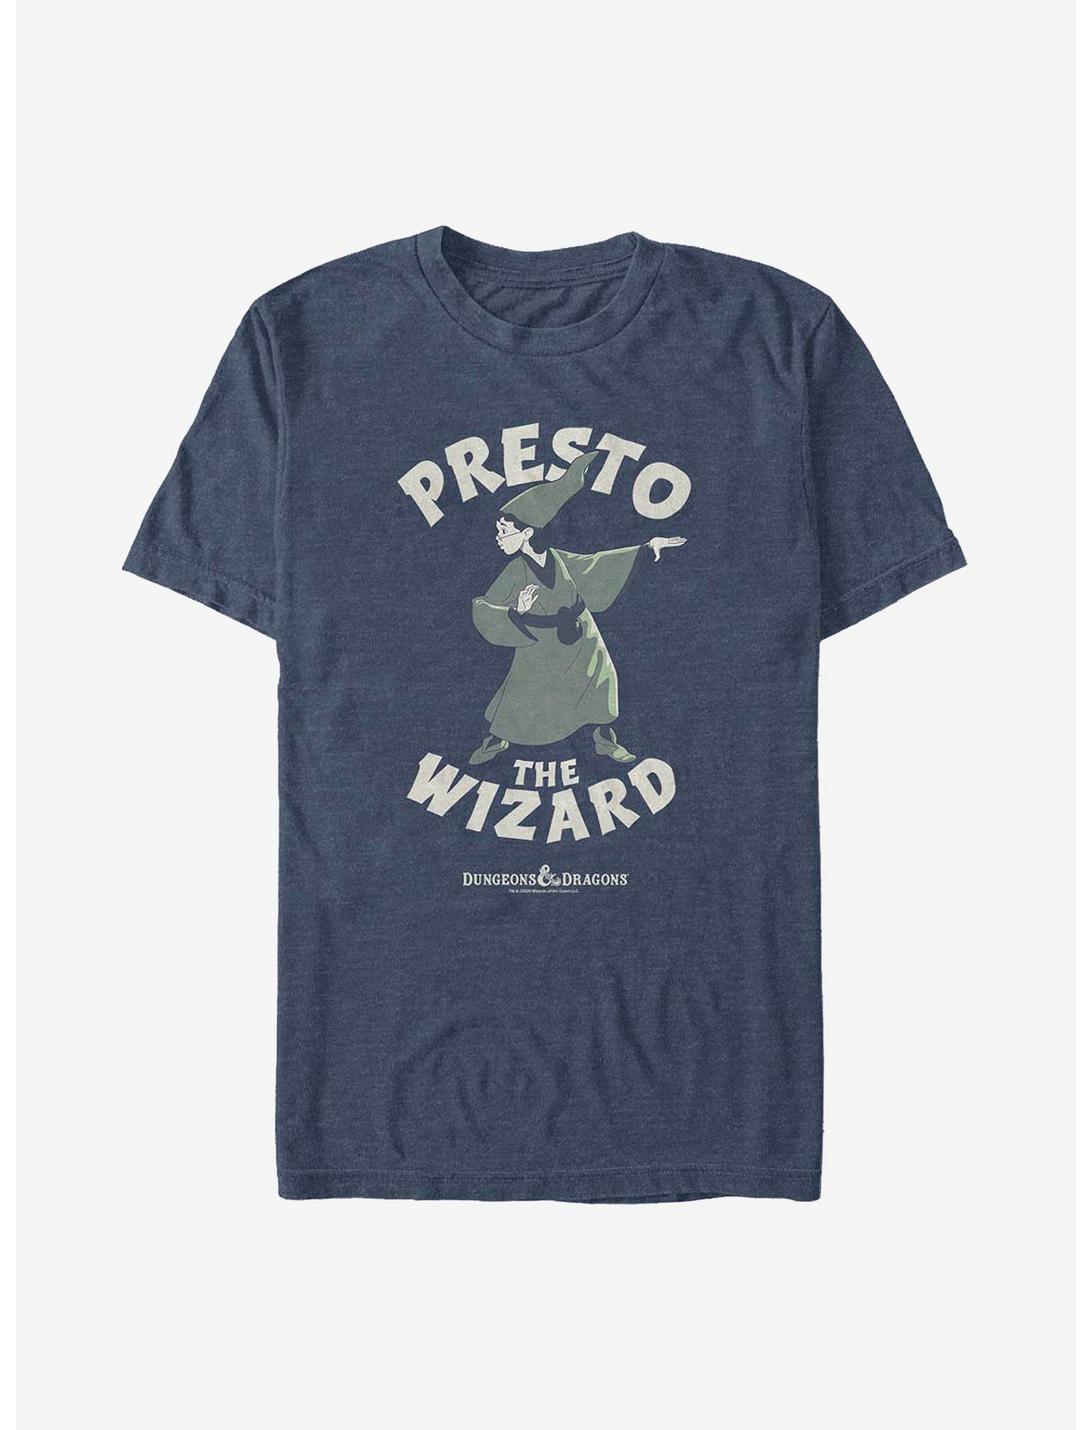 Dungeons & Dragons Presto Wizard T-Shirt, NAVY HTR, hi-res